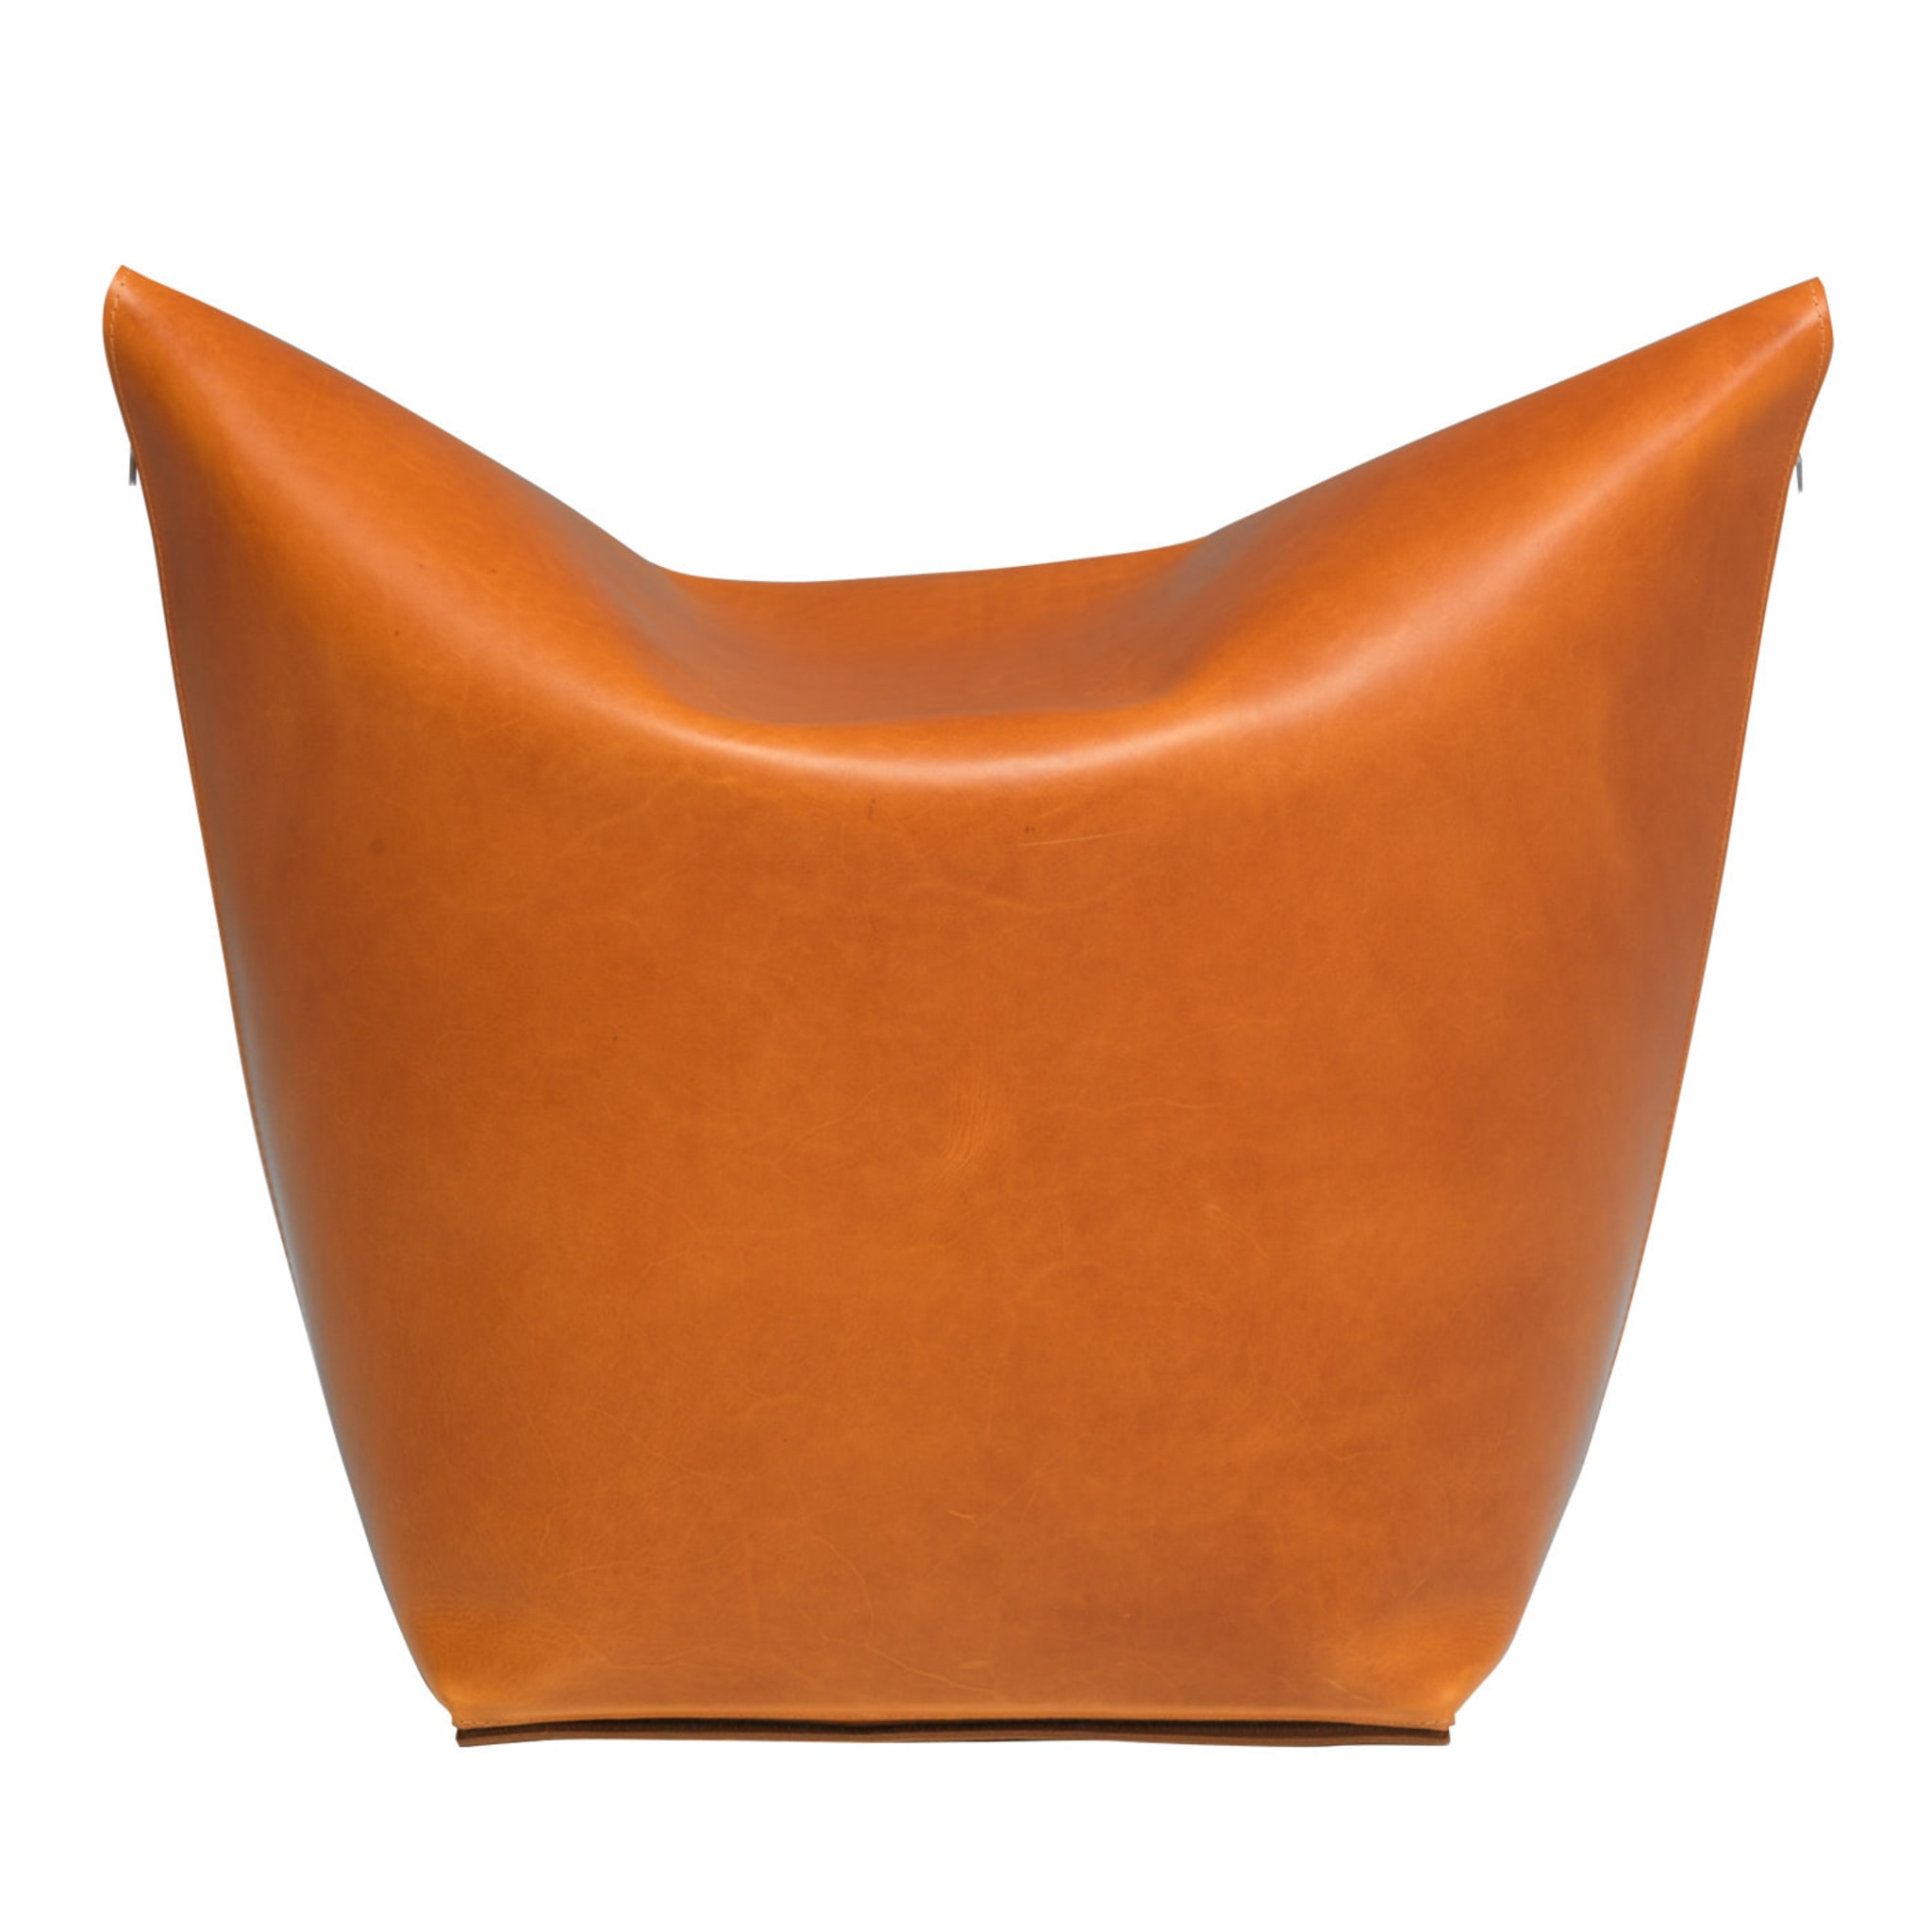 Mao Orange Leather Bag Chair by Viola Tonucci - Main view